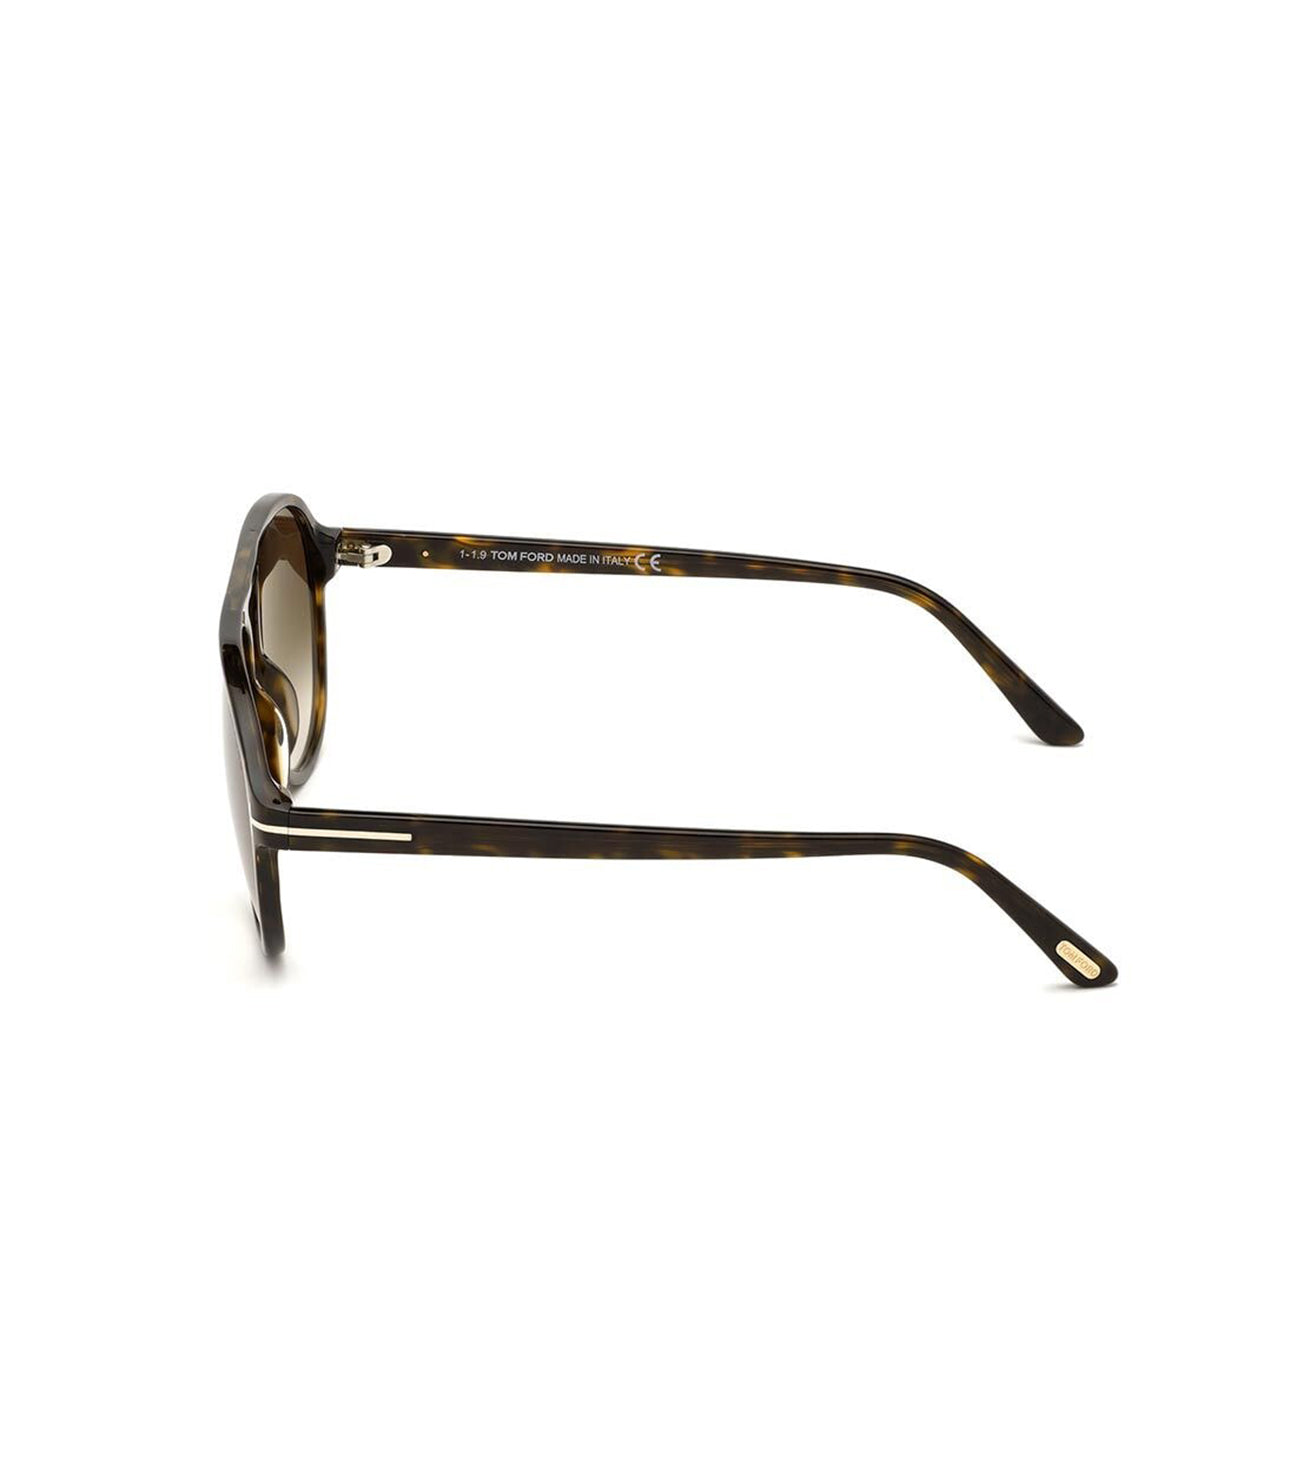 Tom Ford Men's Brown Grey Gradient Aviator Sunglasses